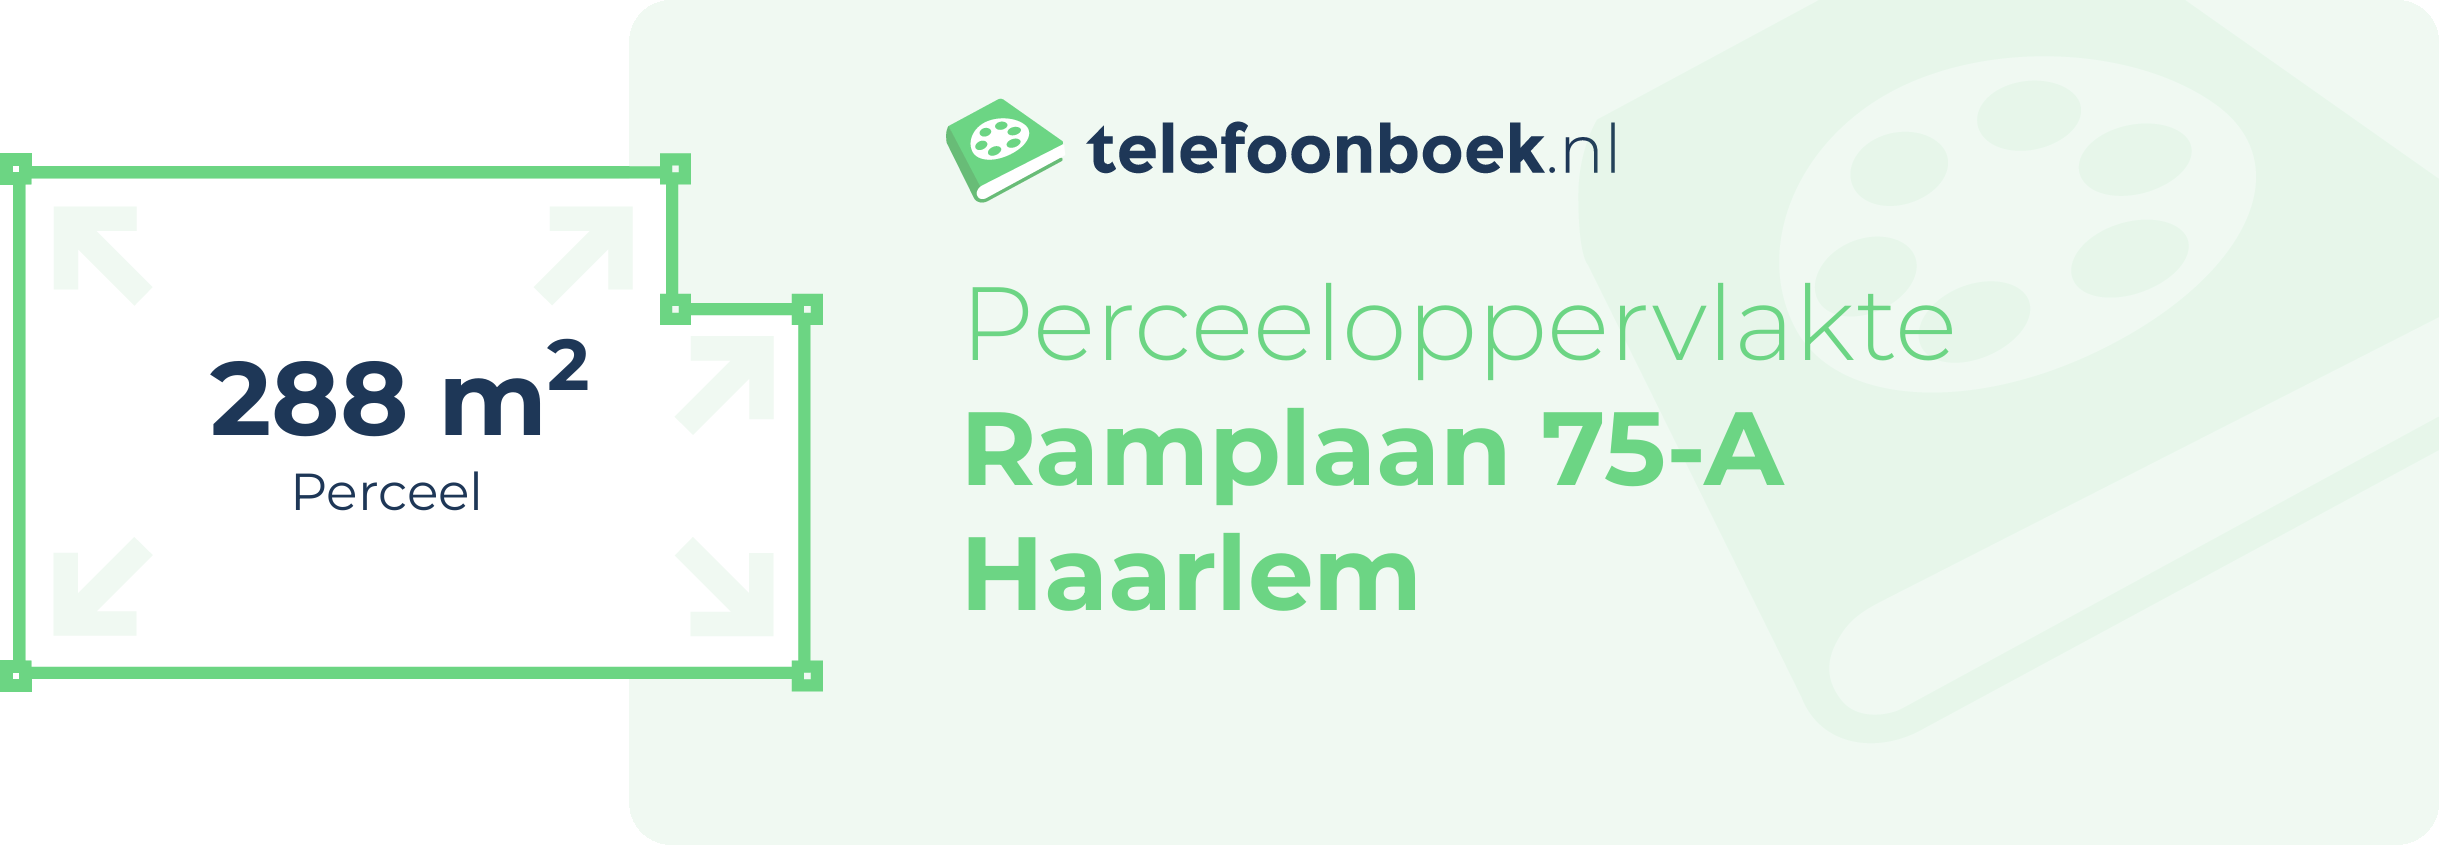 Perceeloppervlakte Ramplaan 75-A Haarlem